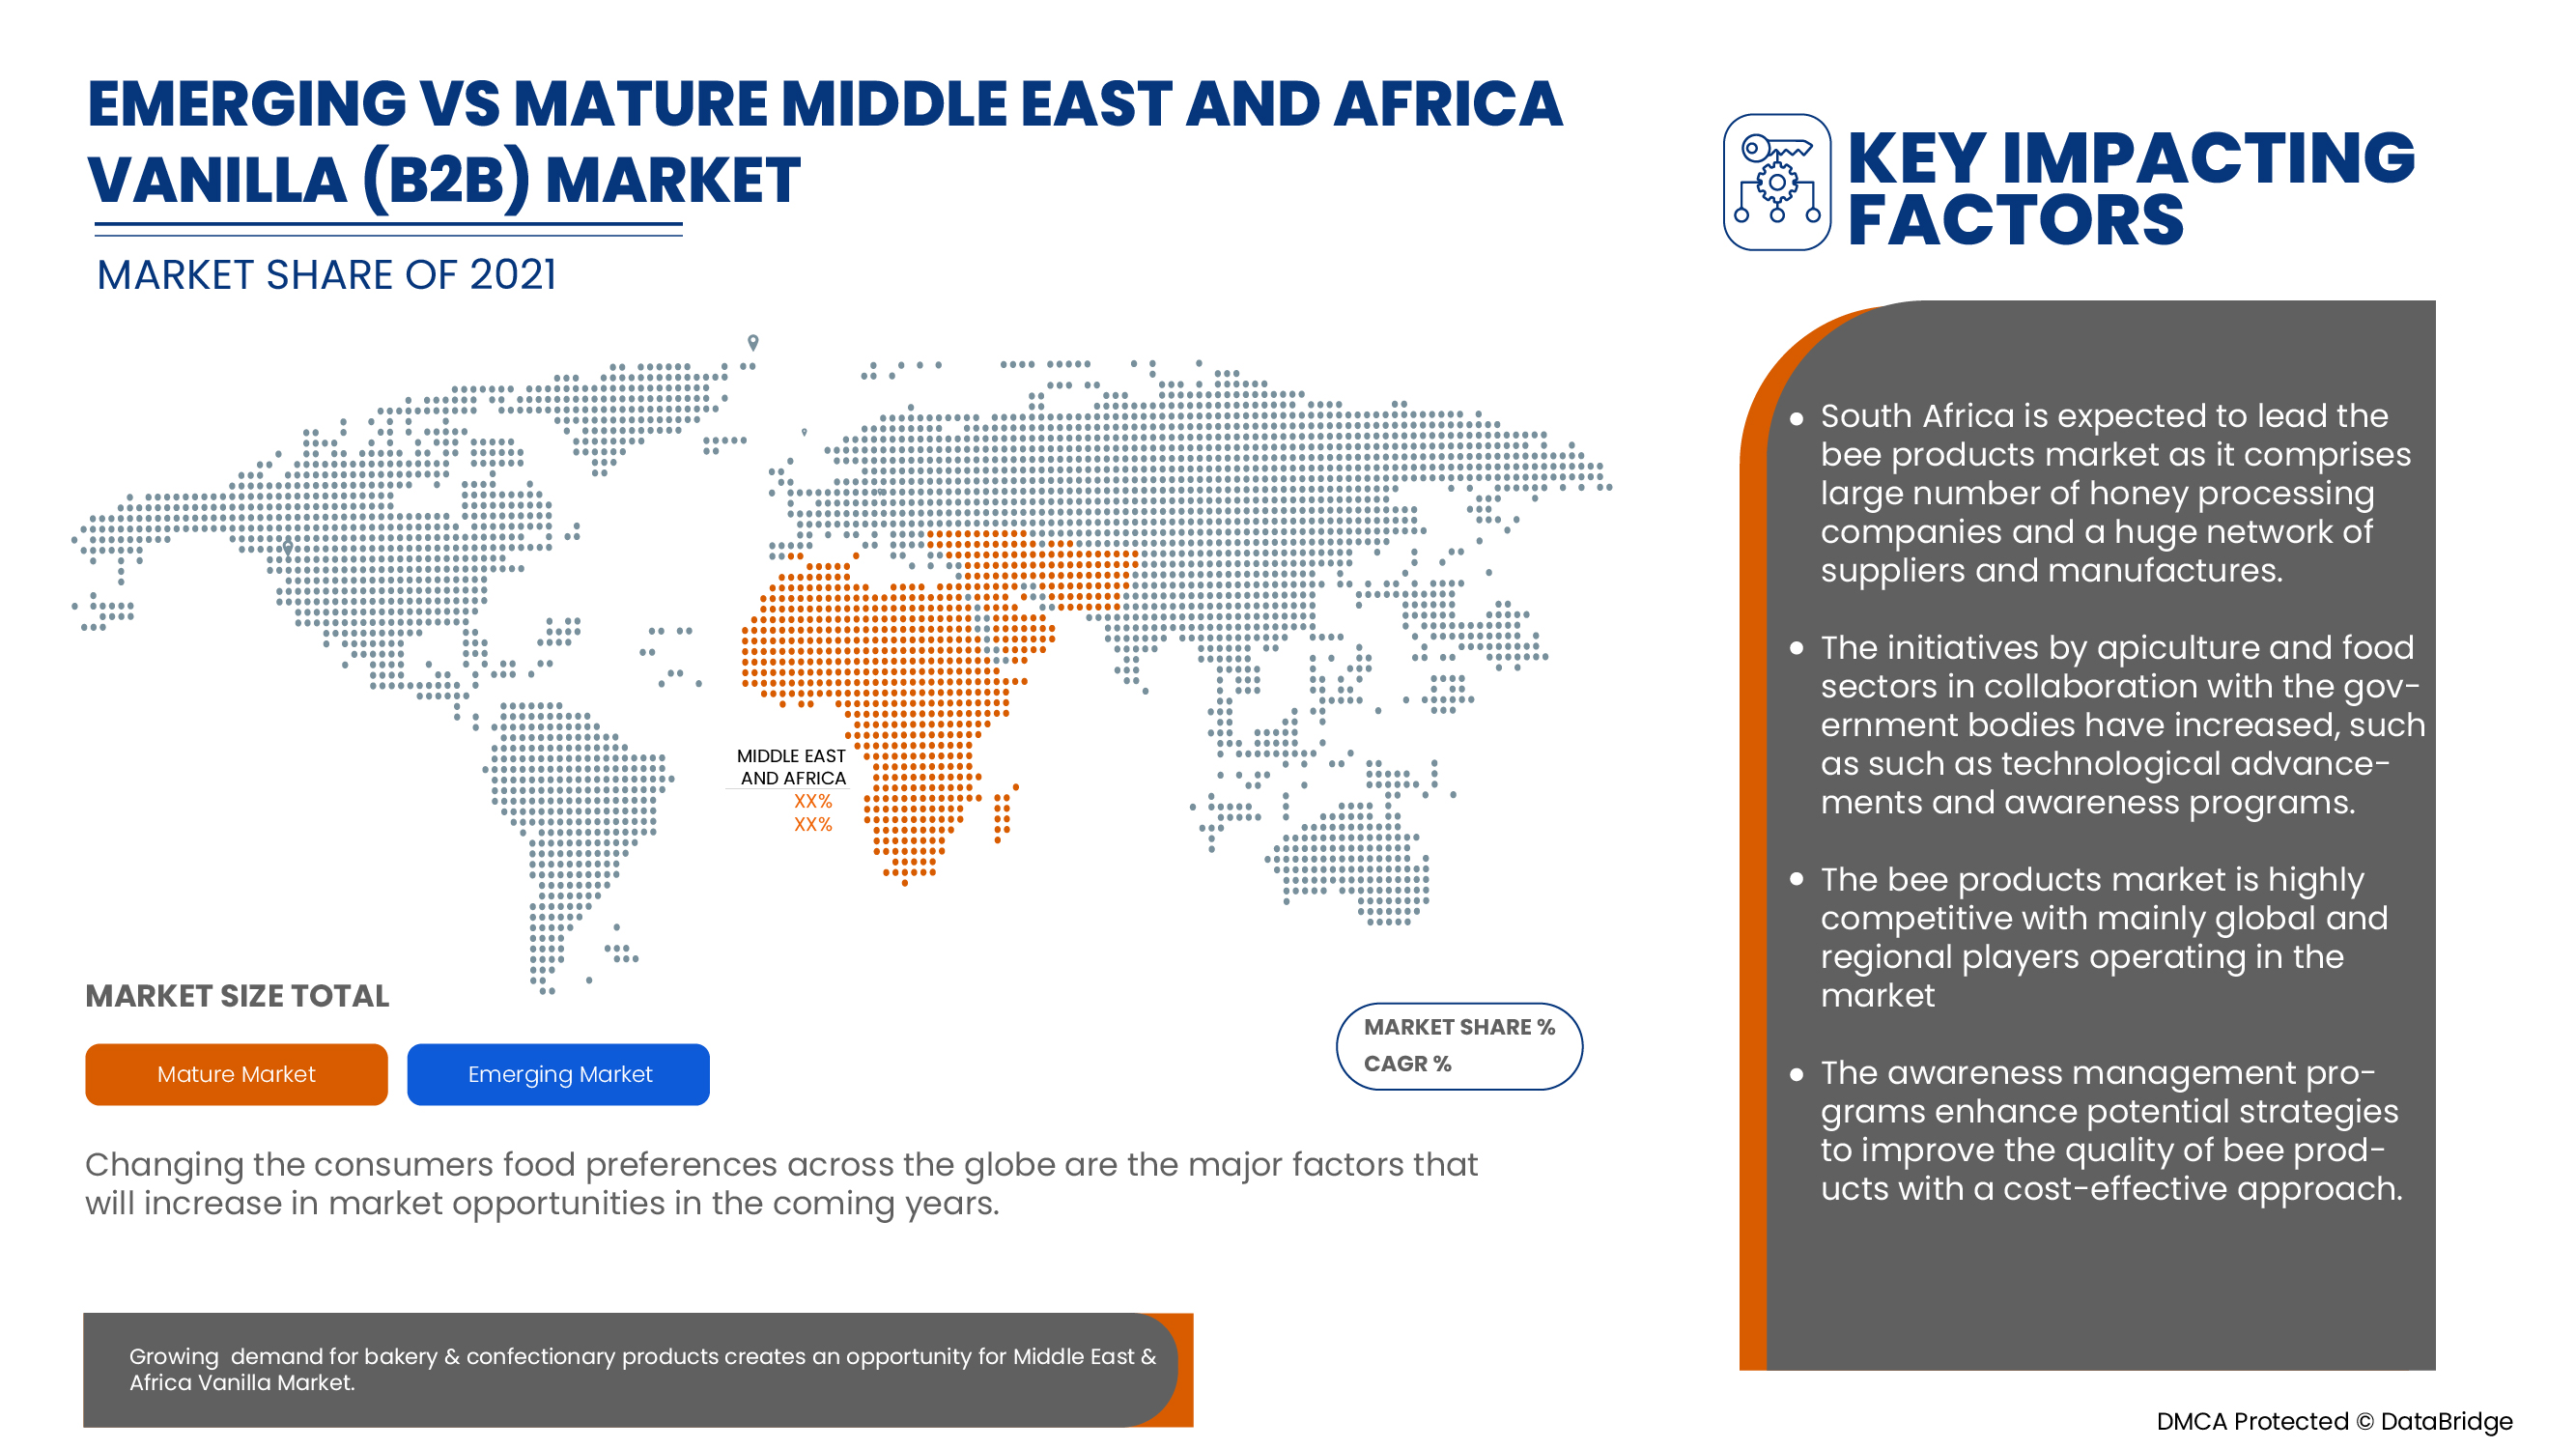 Middle East & Africa Vanilla (B2B) Market